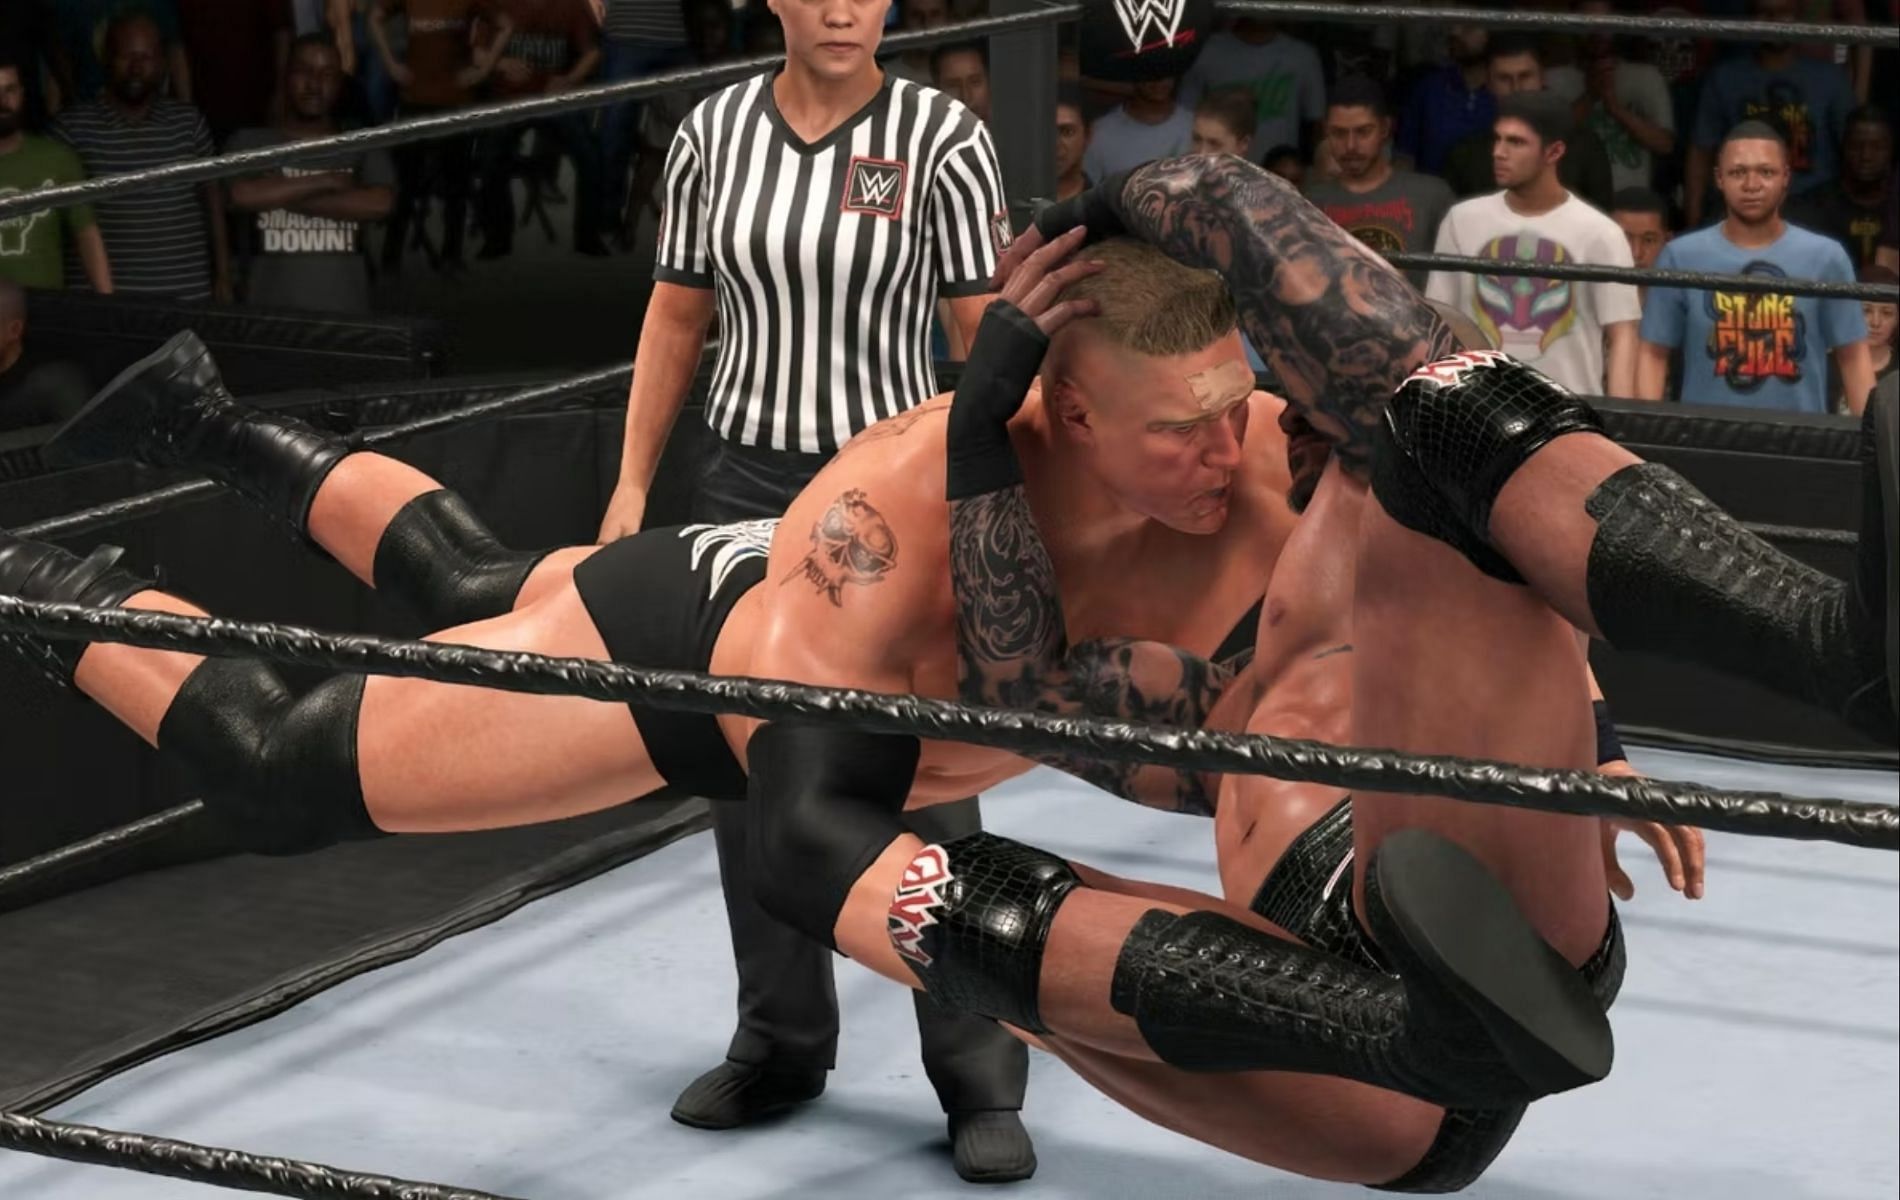 The Viper, Randy Orton delivers his finishing move, the RKO, through the Irish Ropes (Image via 2K Games)